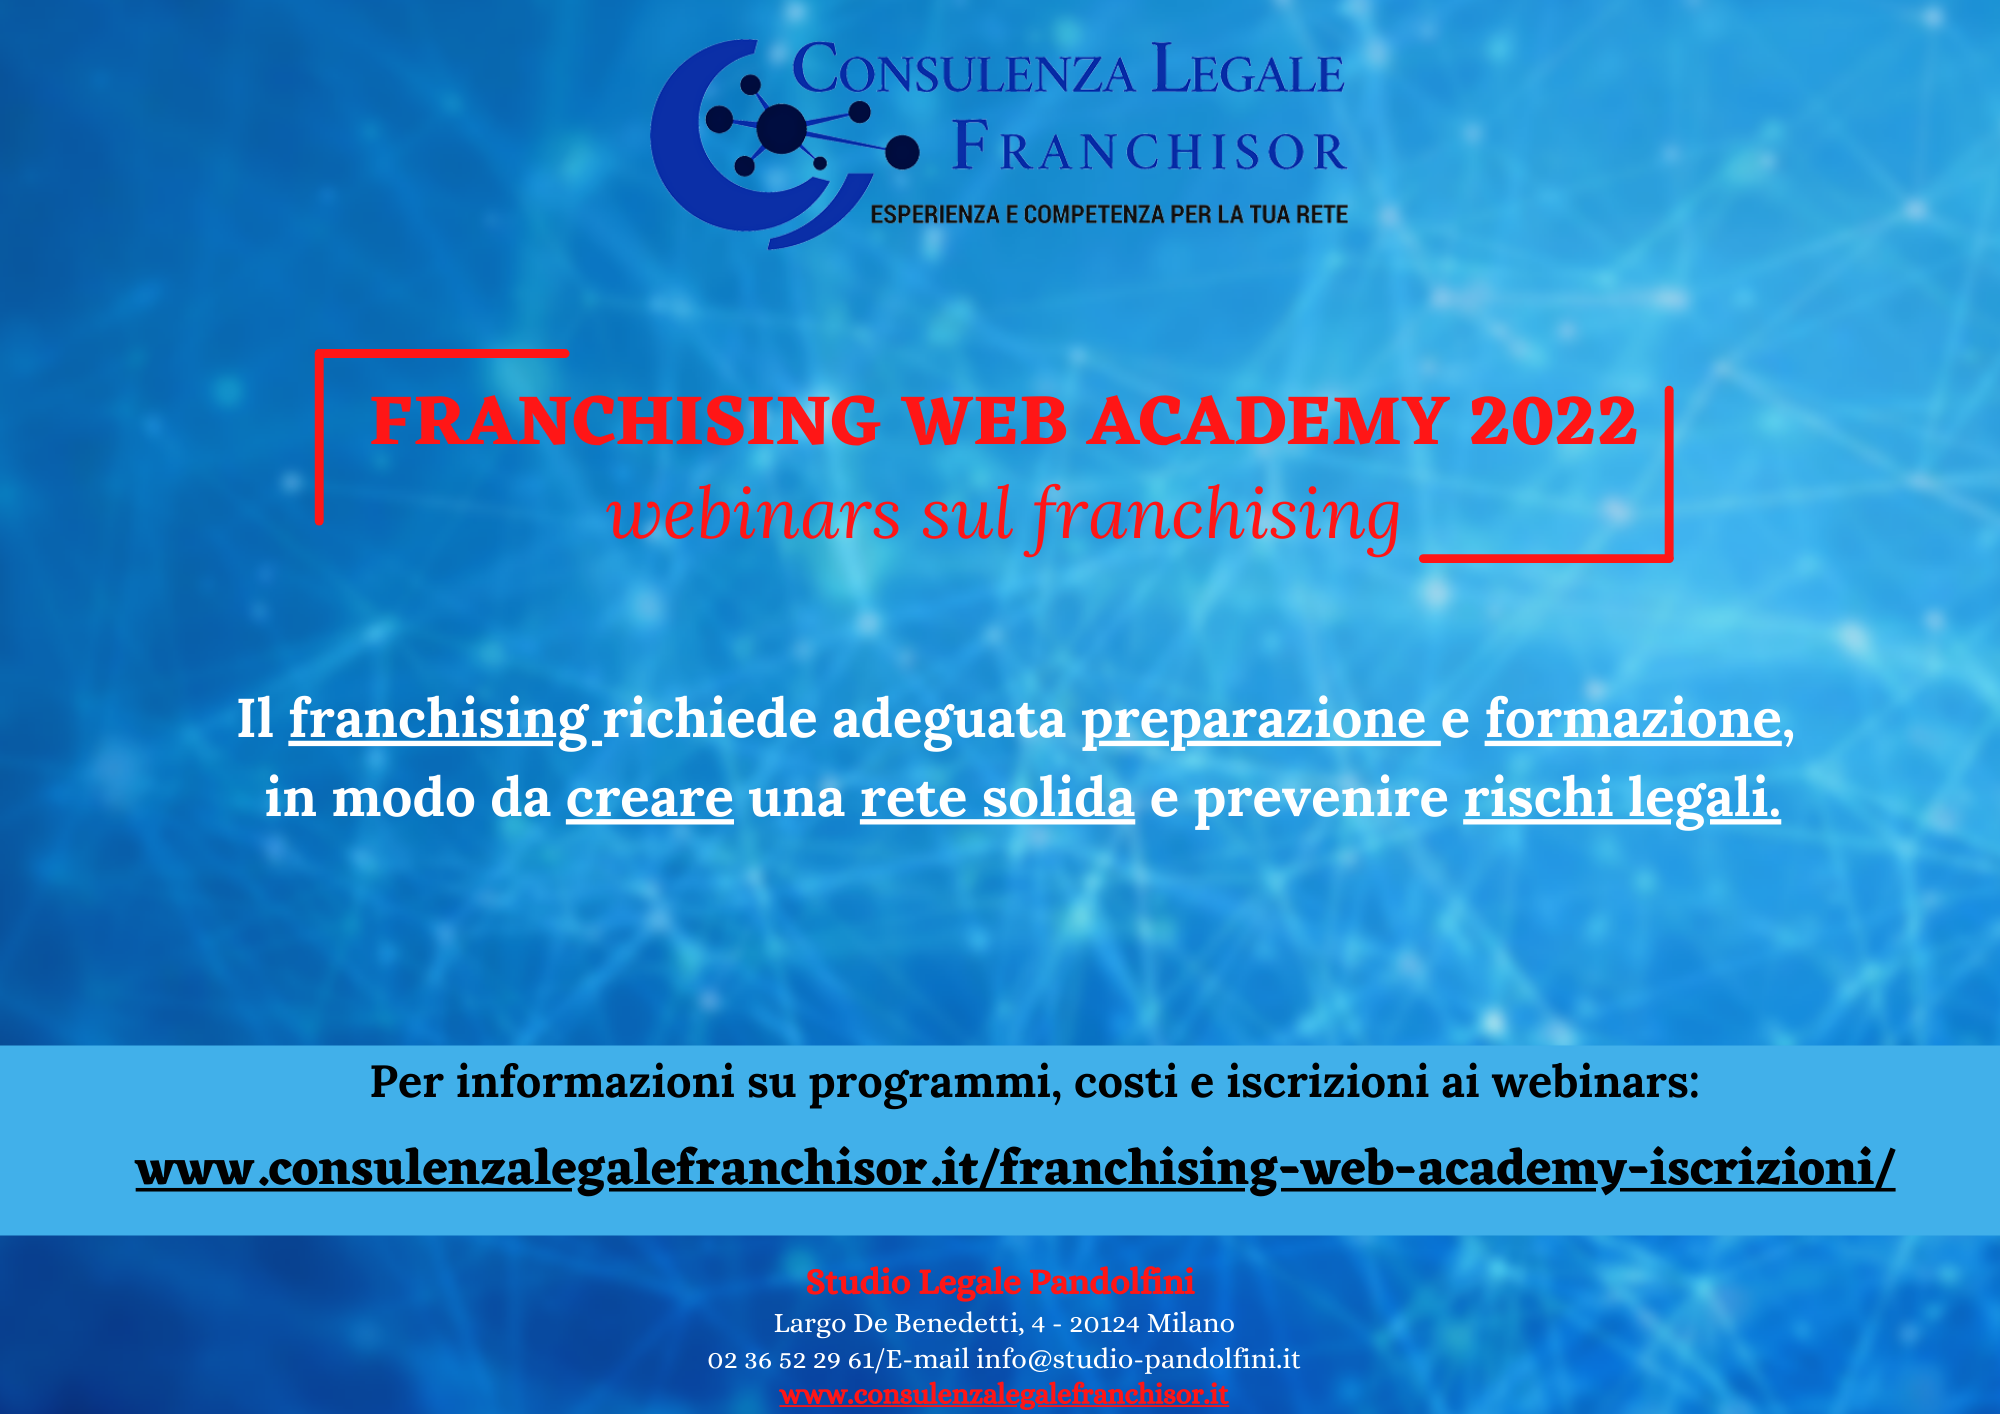 Franchising Web Academy 2022 – Webinars dedicati al franchising